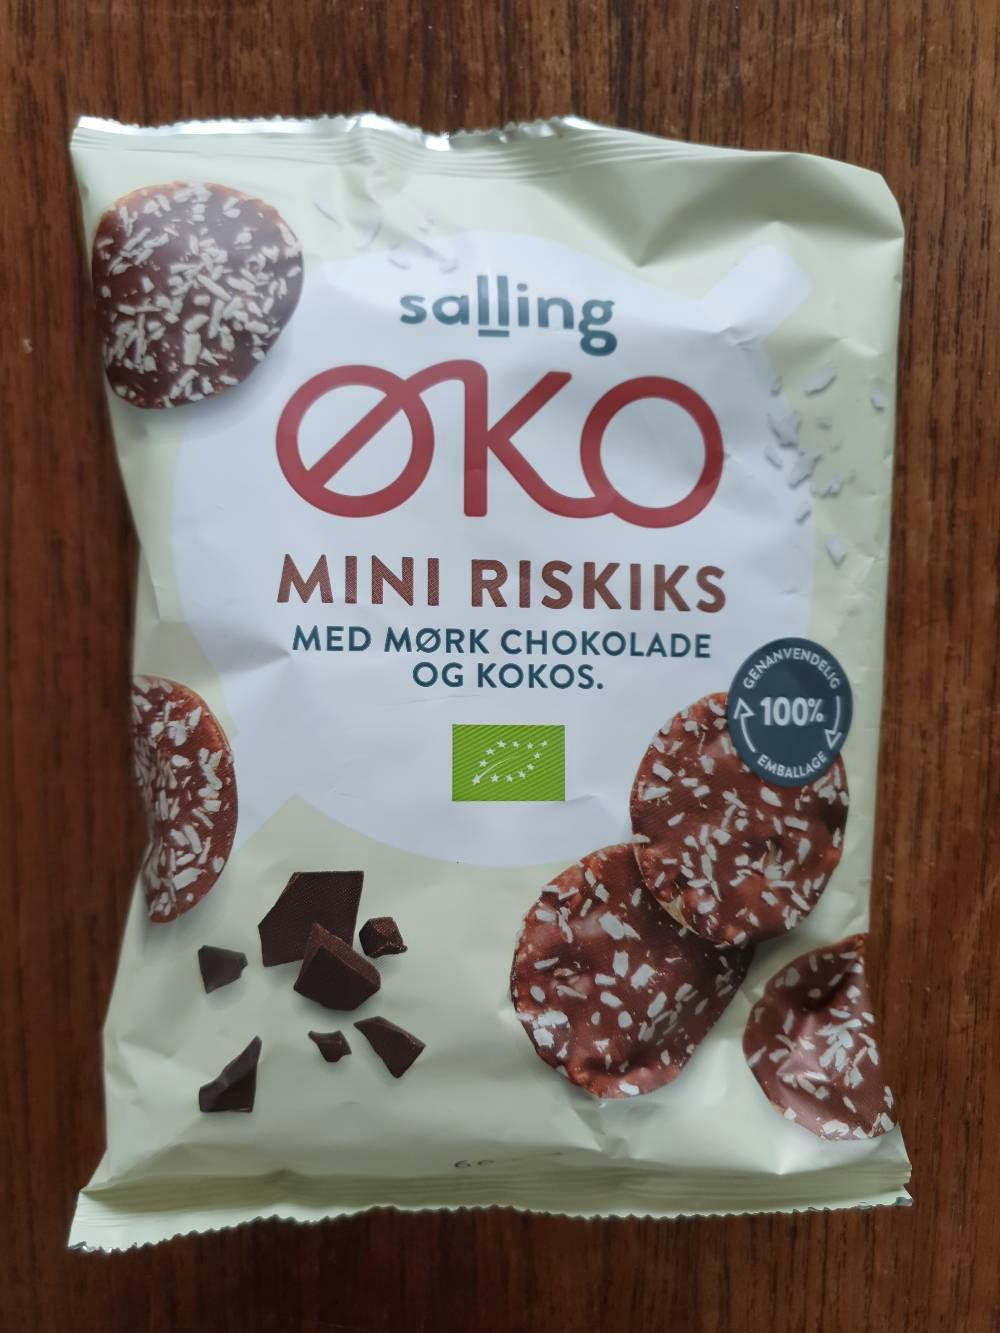 Mini riskiks med mørk chokolade og kokos, Salling